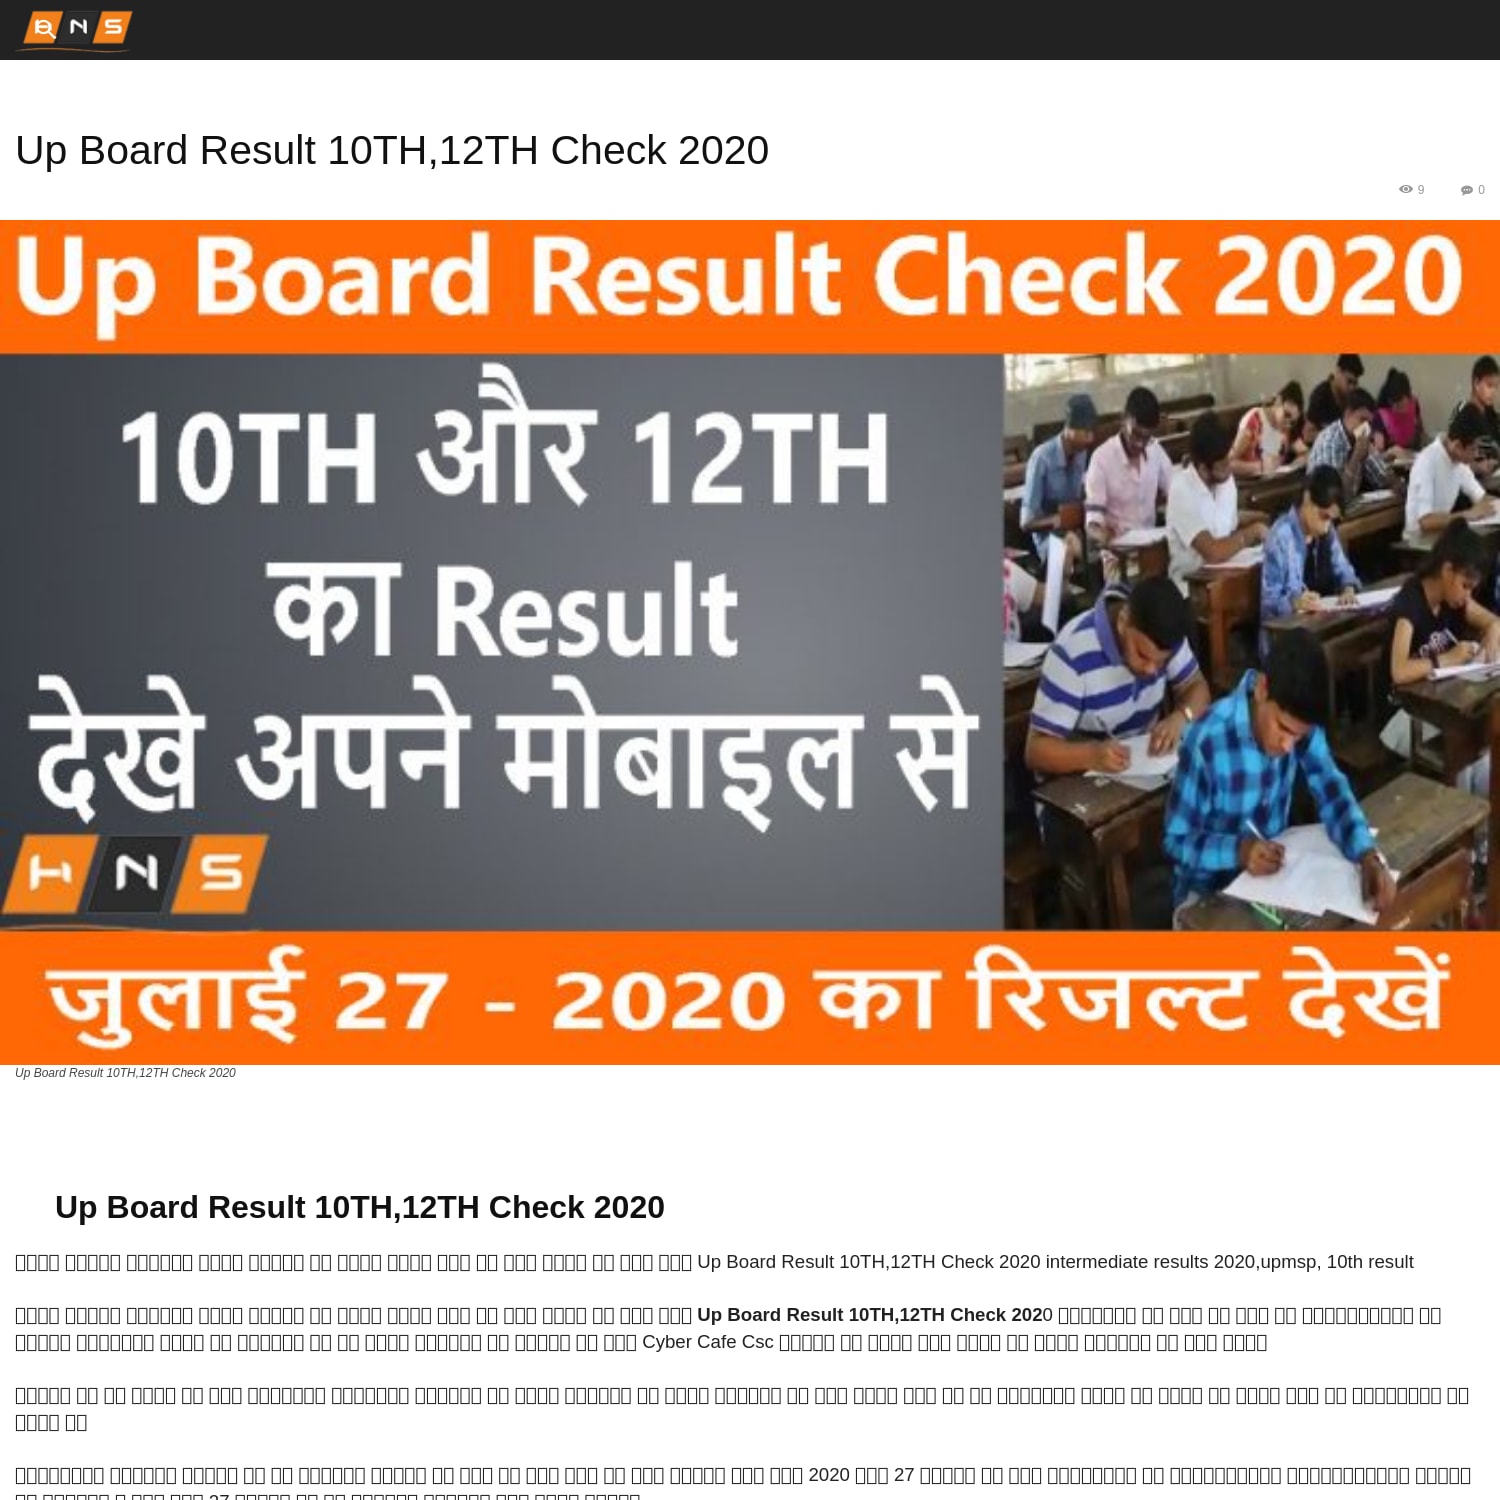 Up Board Result 10TH,12TH Check 2020